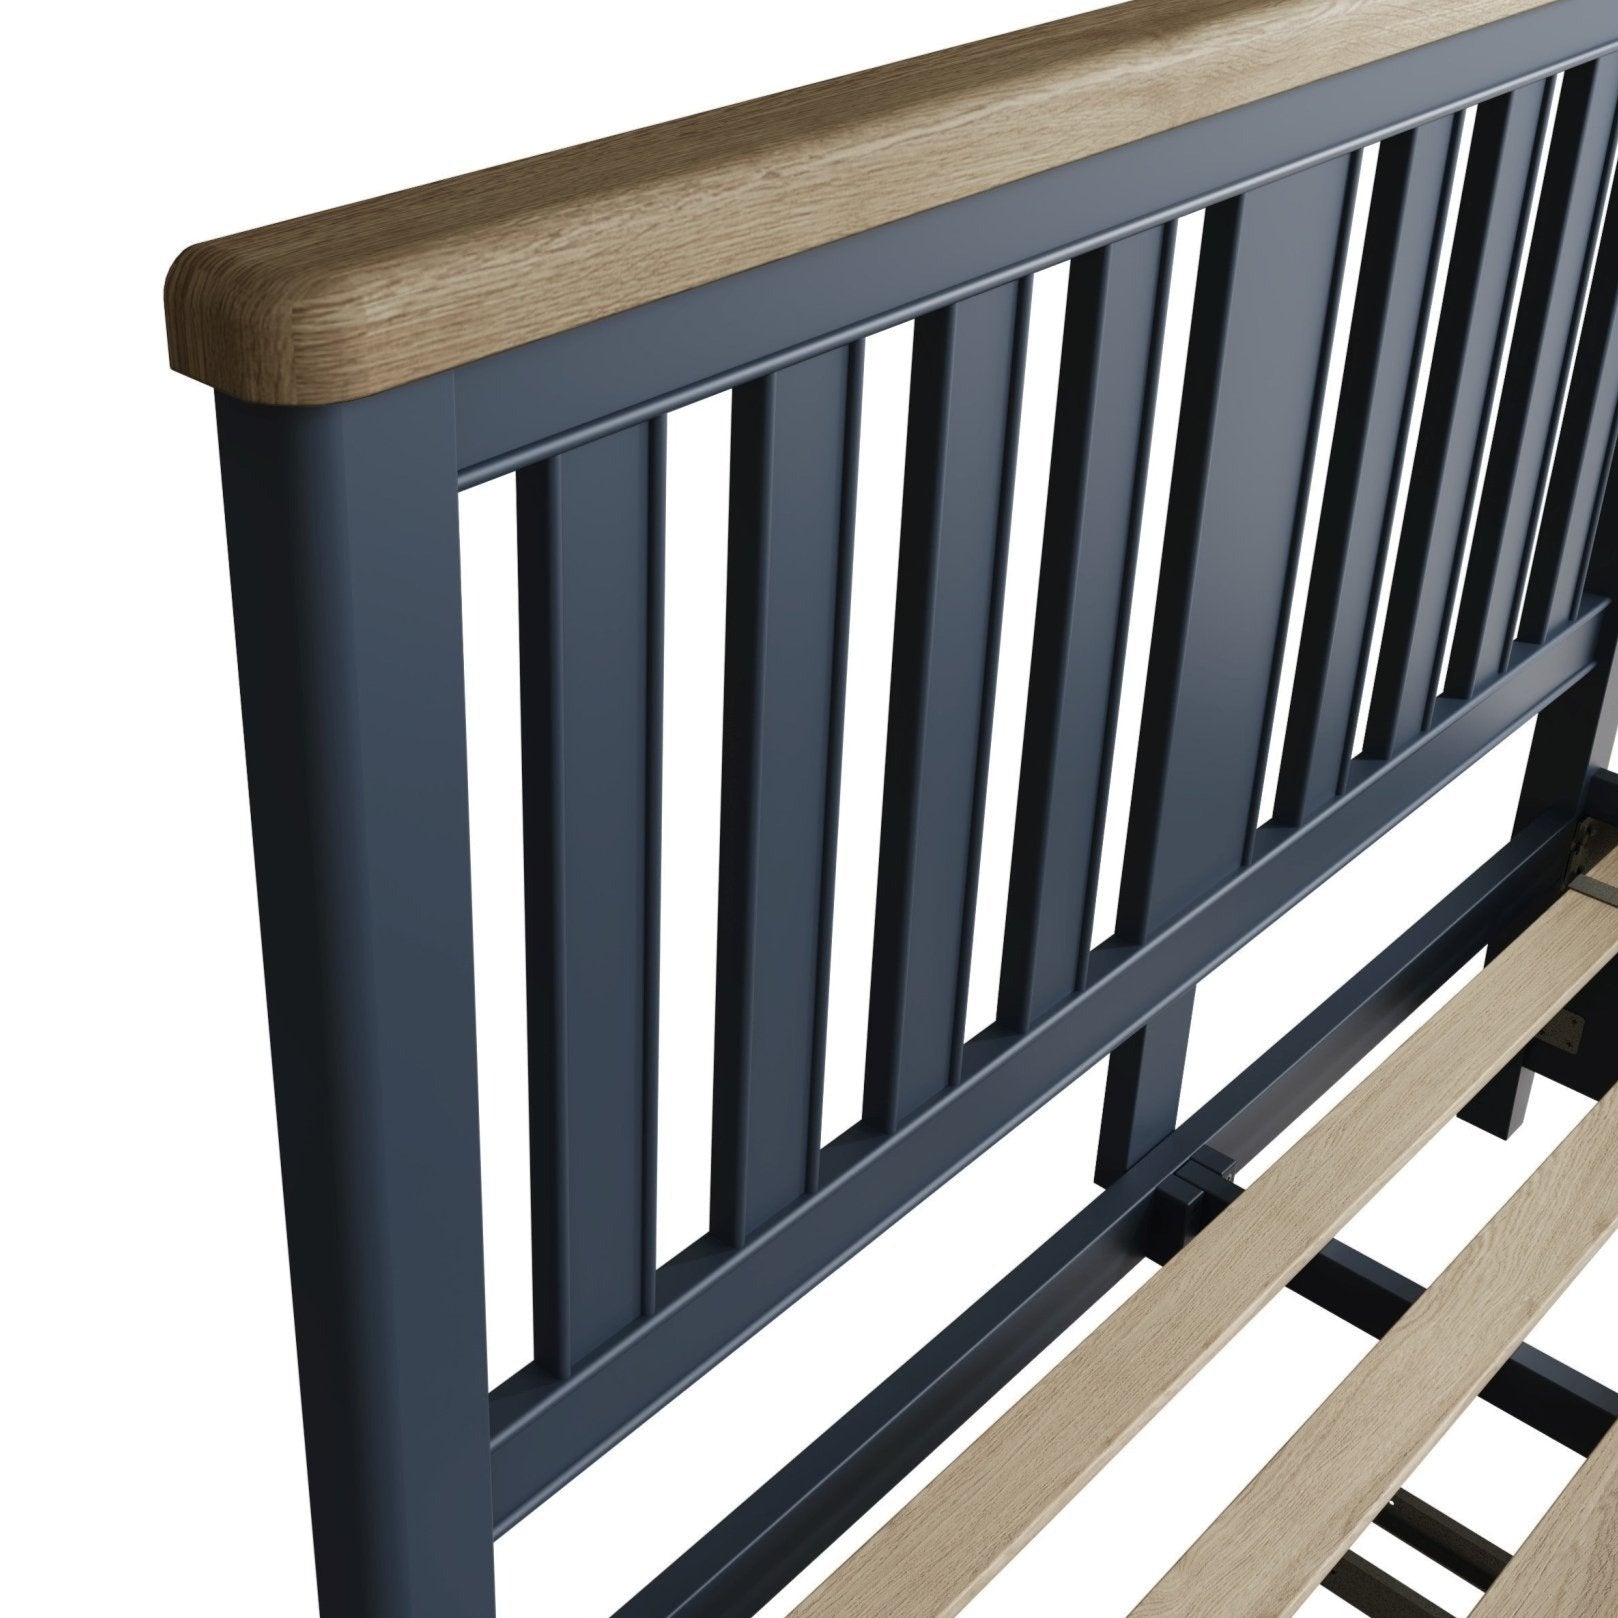 Rogate Blue 6'0 Super King Bed Frame - Wooden Headboard & Drawers - Duck Barn Interiors